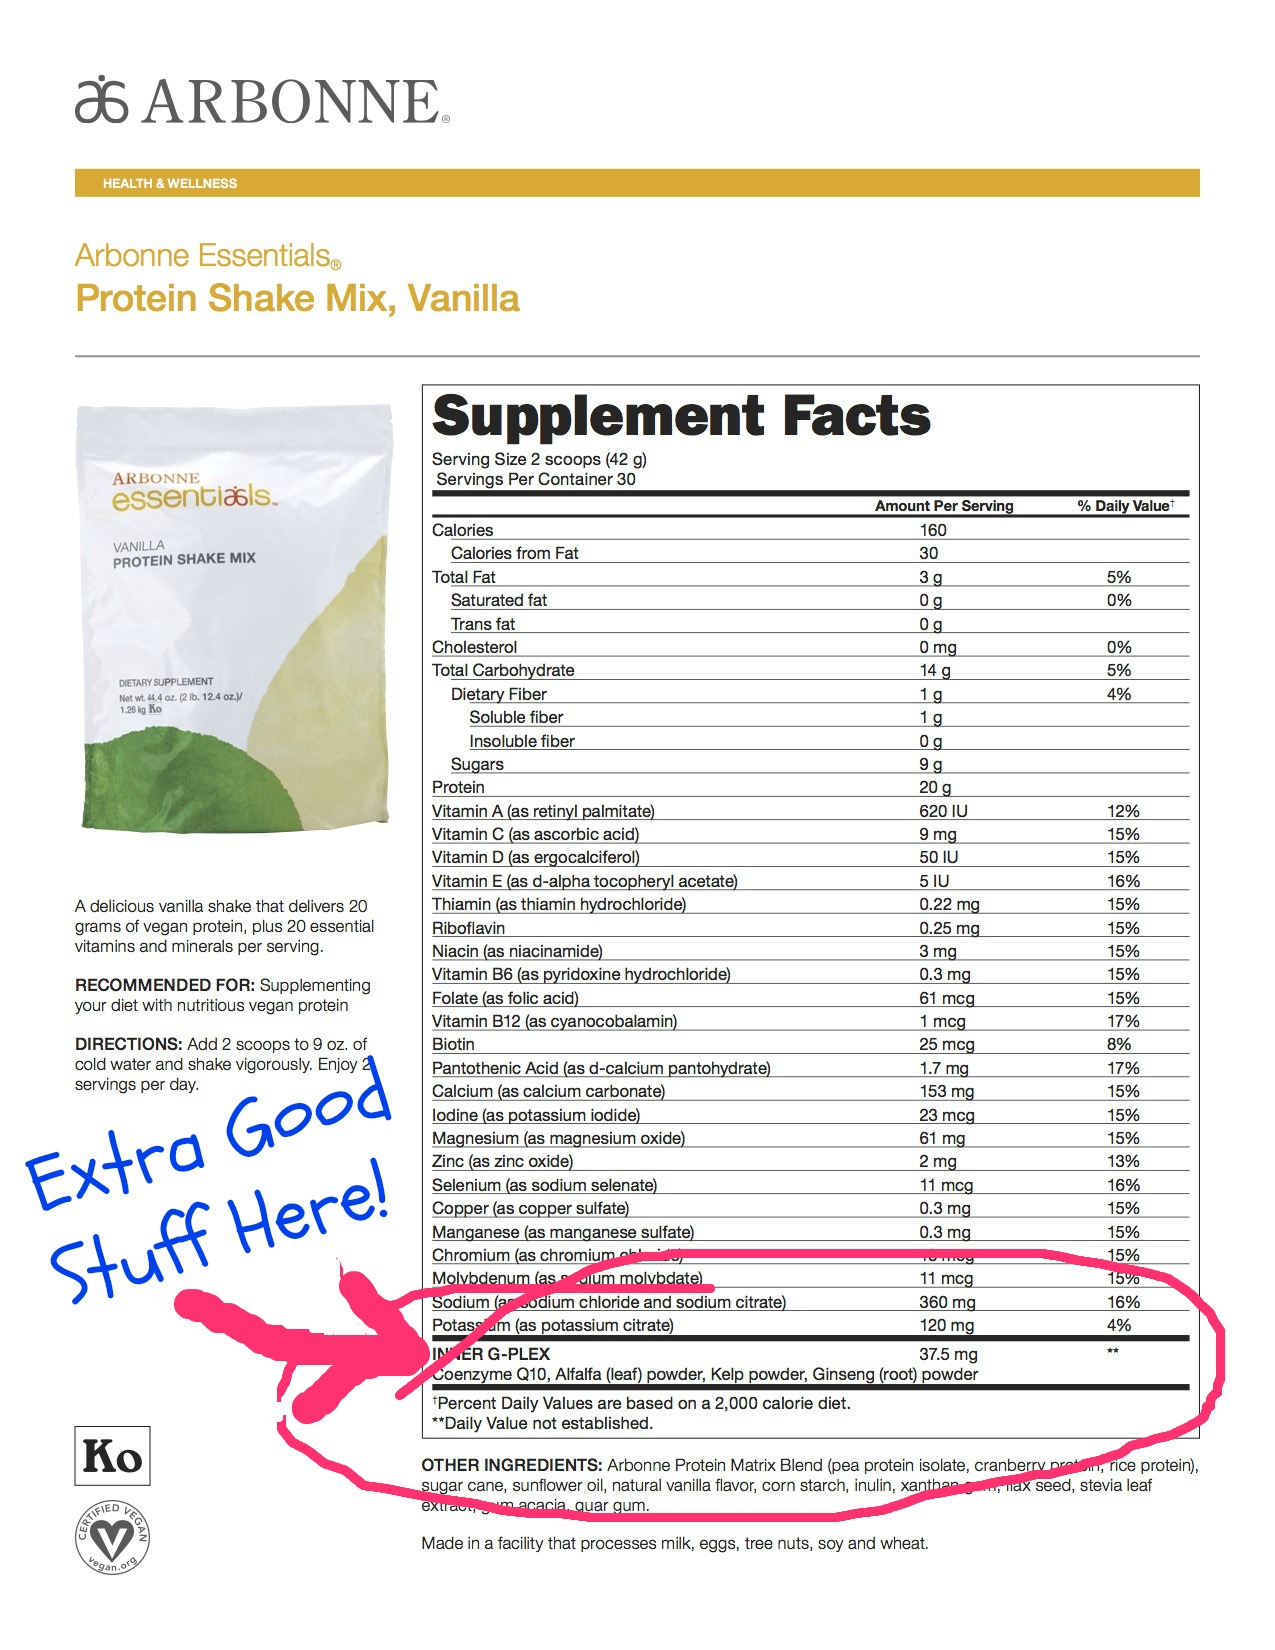 Arbonne Vanilla Protein Powder Product Knowledge Sheet